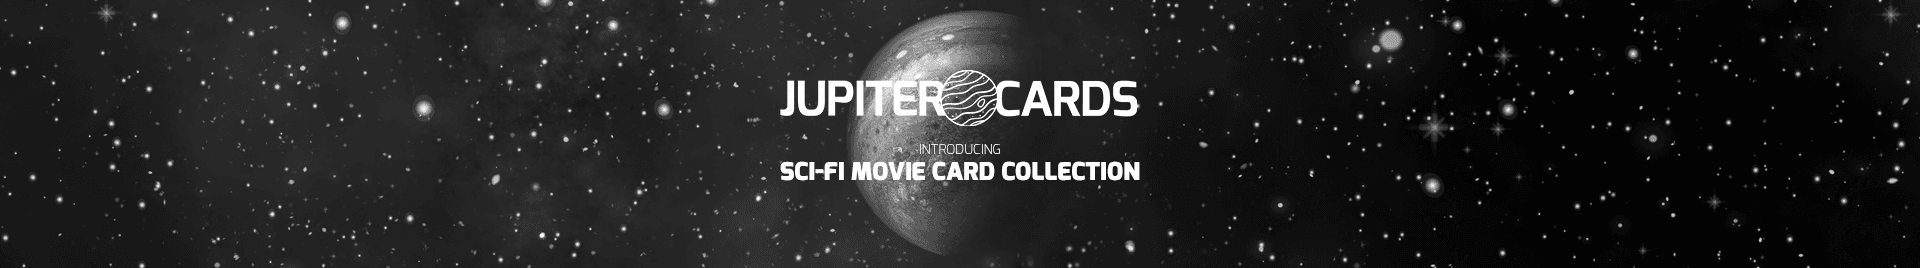 Jupiter_Cards 橫幅